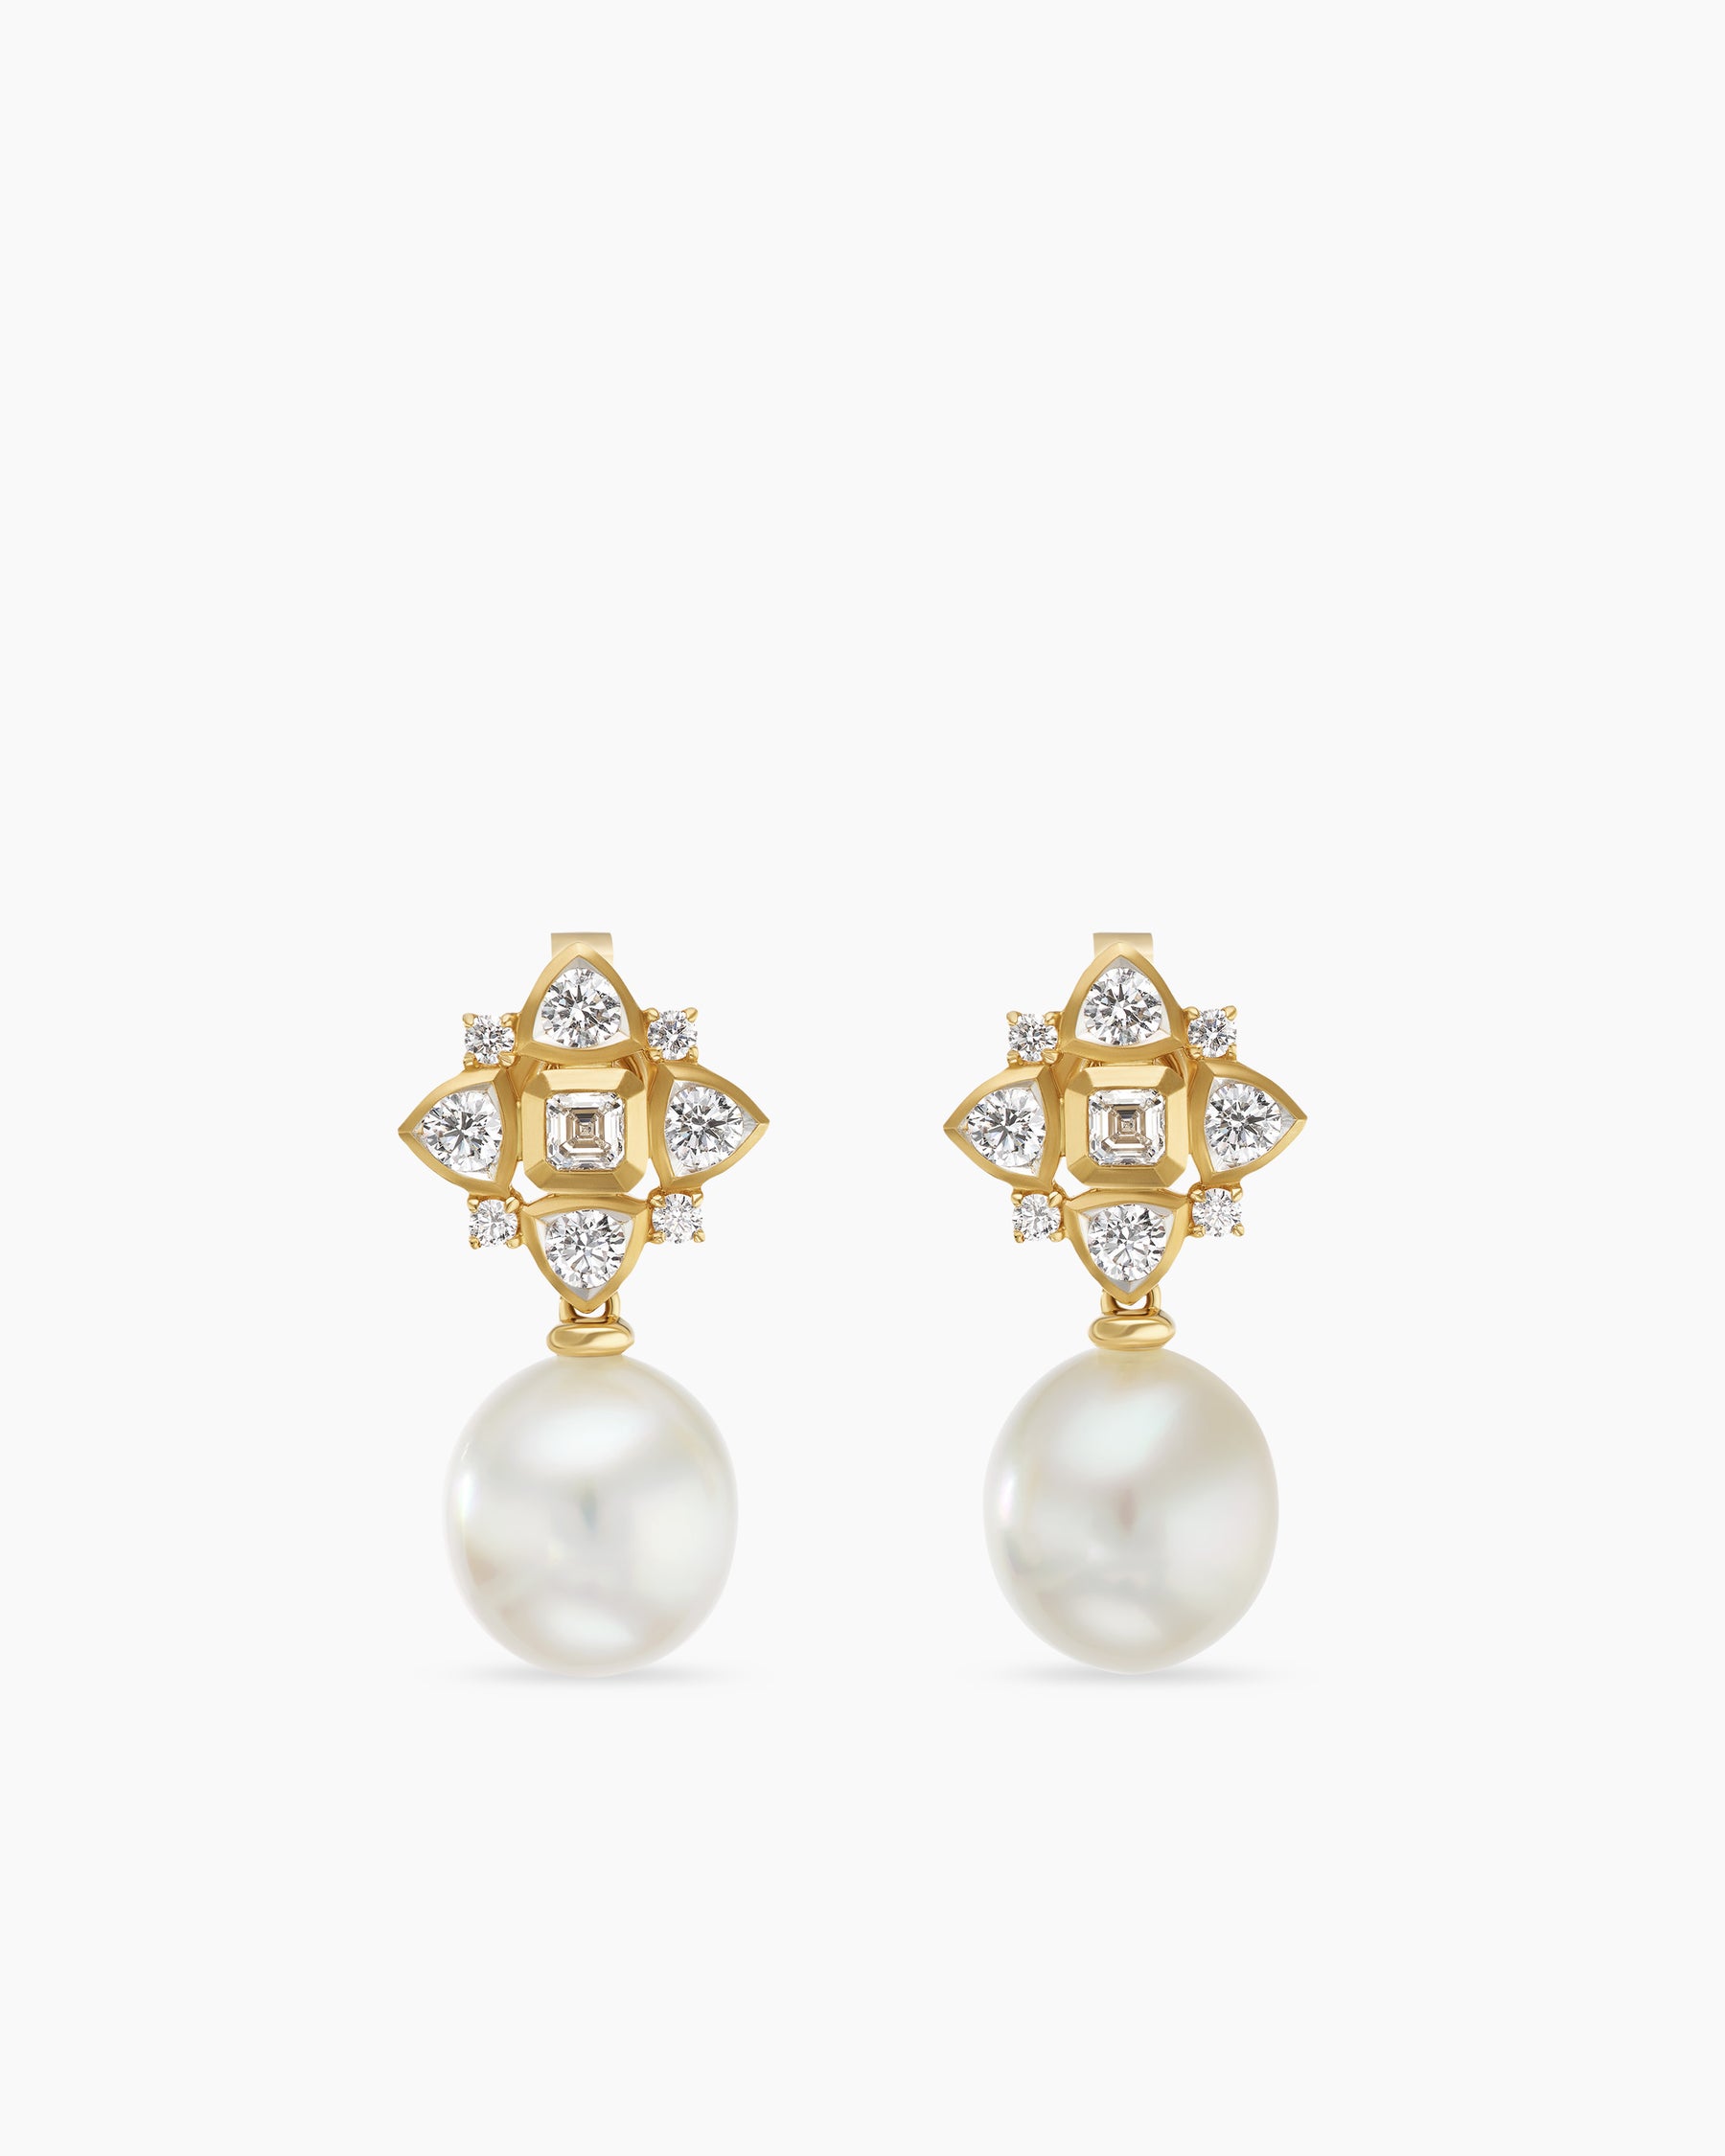 David Yurman Pearl and Pavé Drop Earrings in 18K Yellow Gold with Diamonds